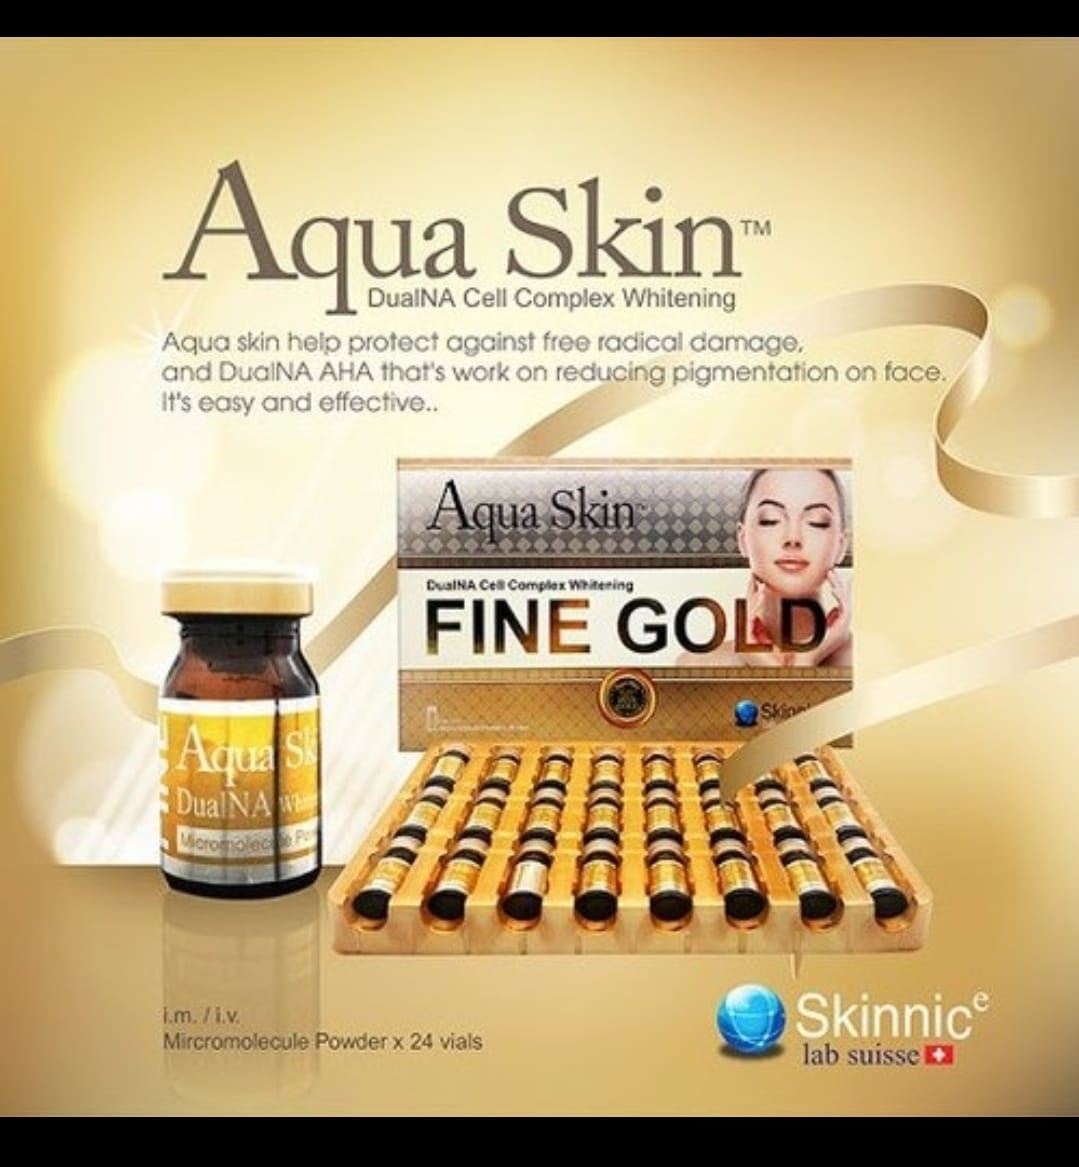 Aqua Skin Fine Gold DualNa Cell Complex Glutathione Skin Whitening Injection reviews